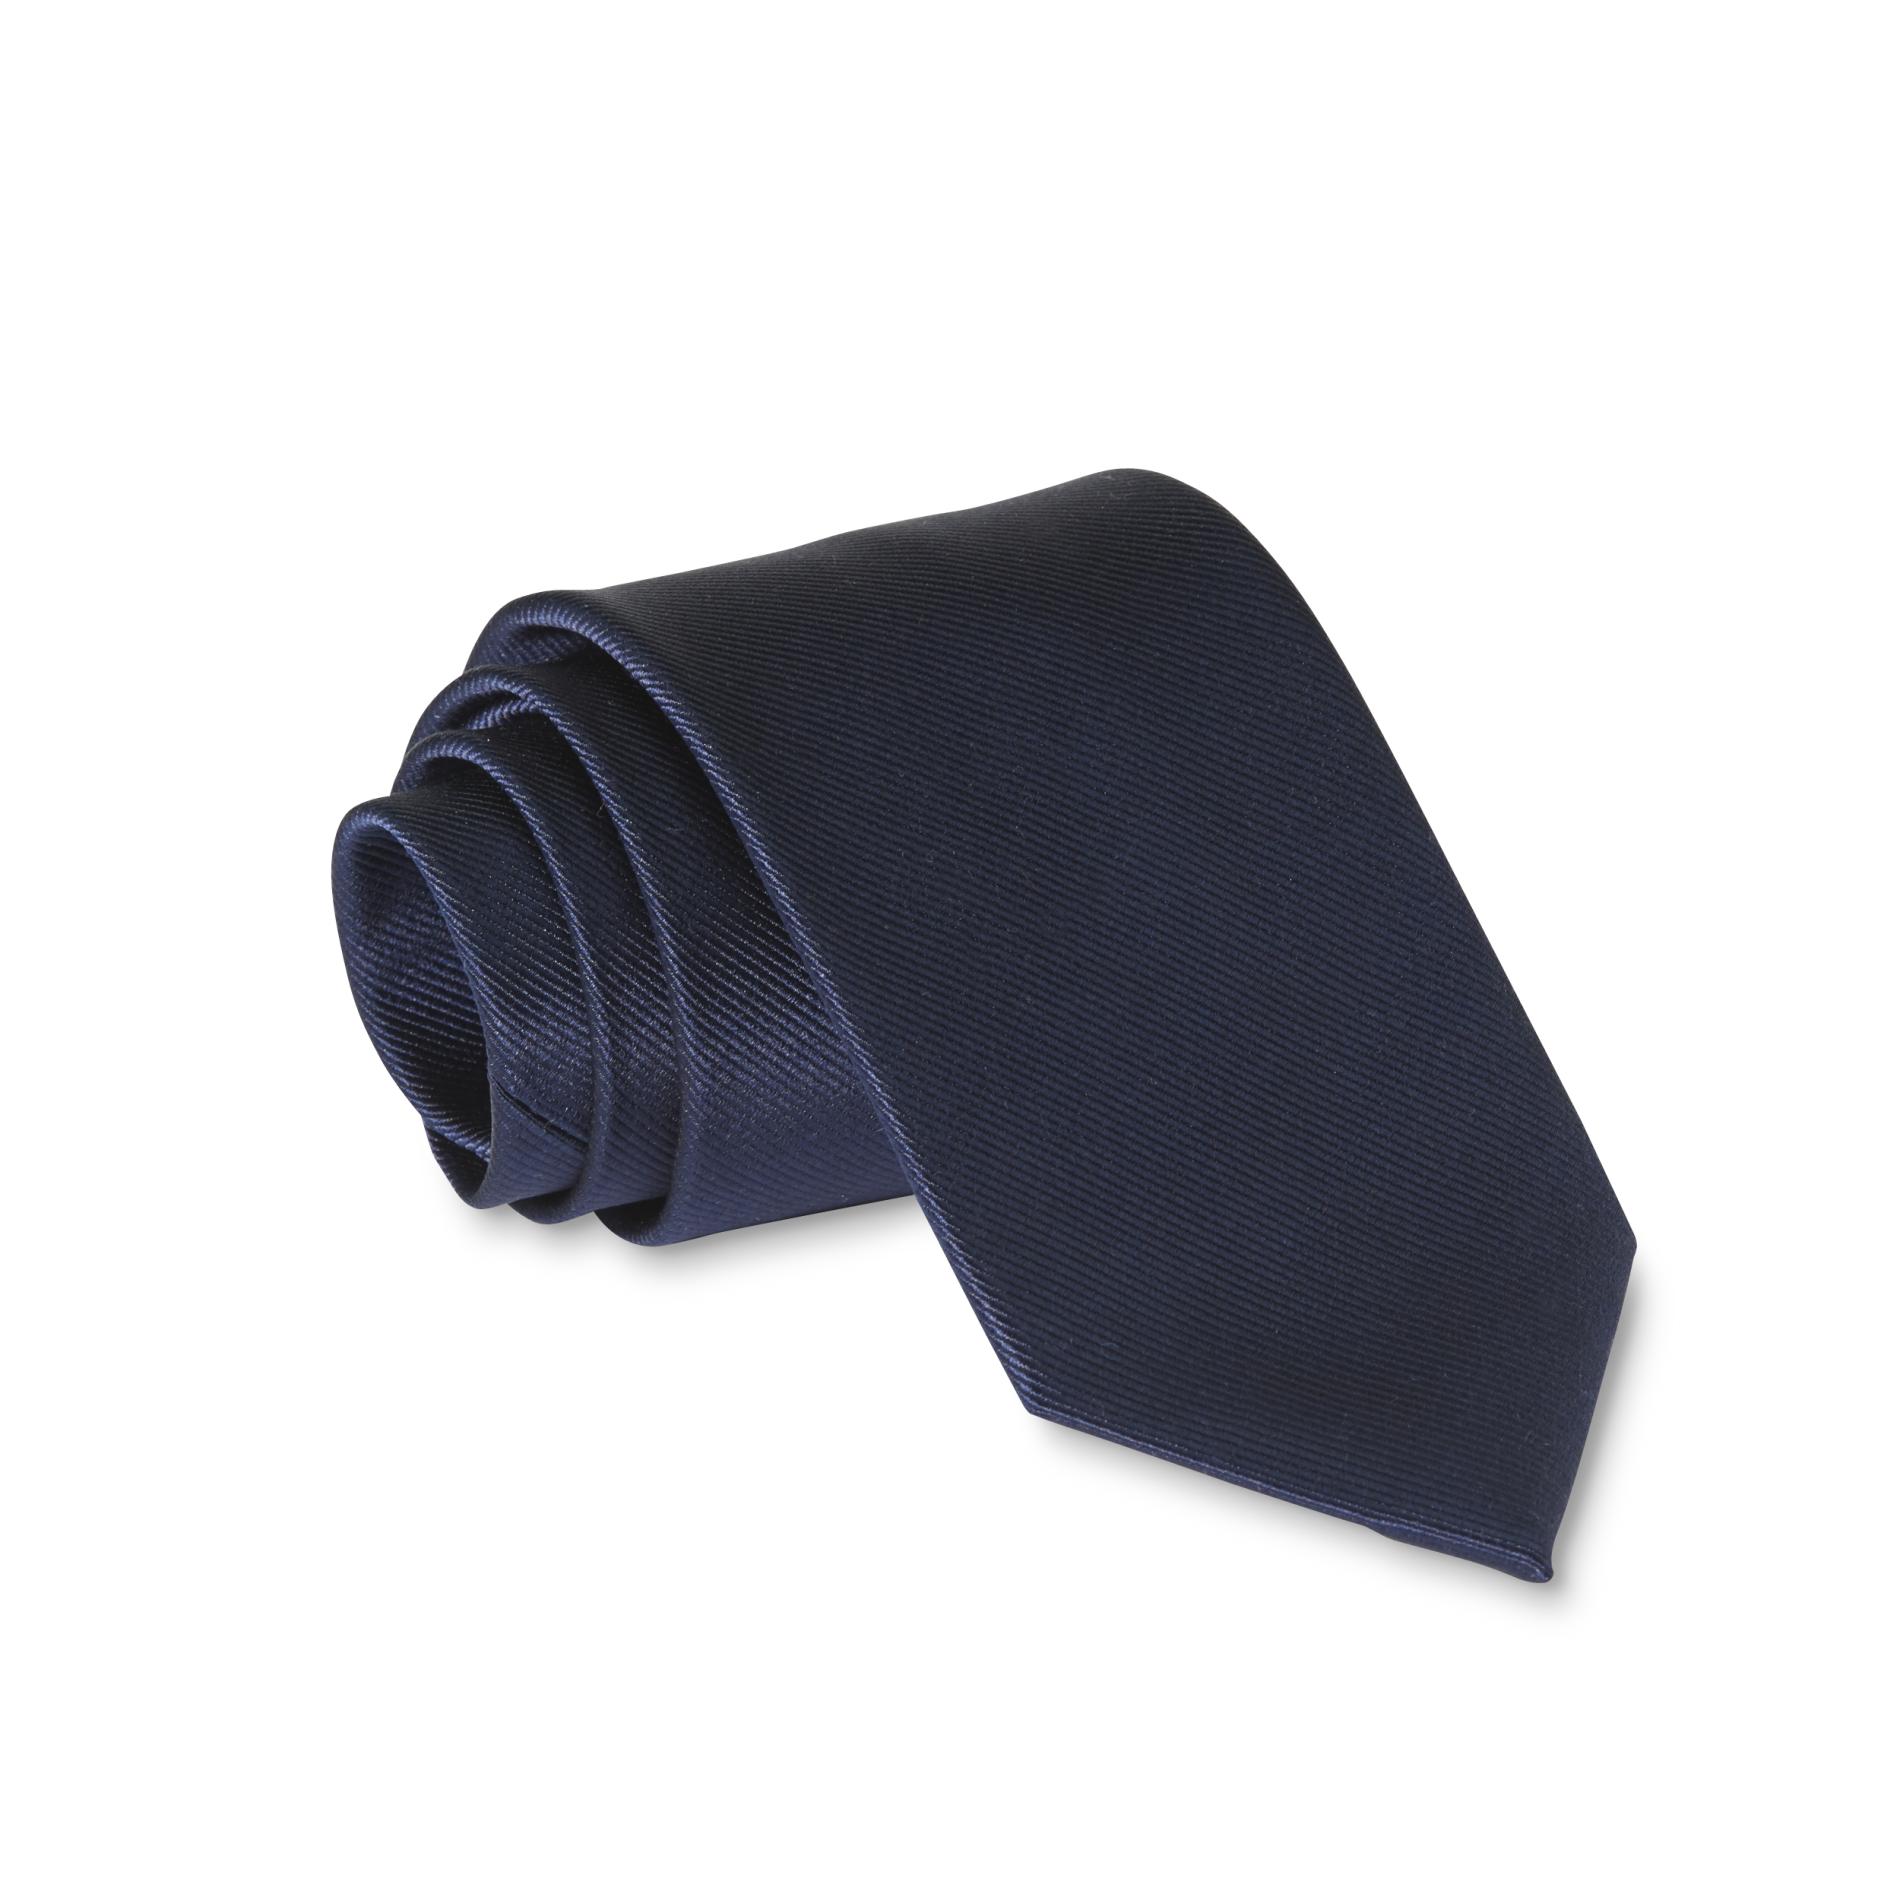 Covington Men's Necktie - Solid